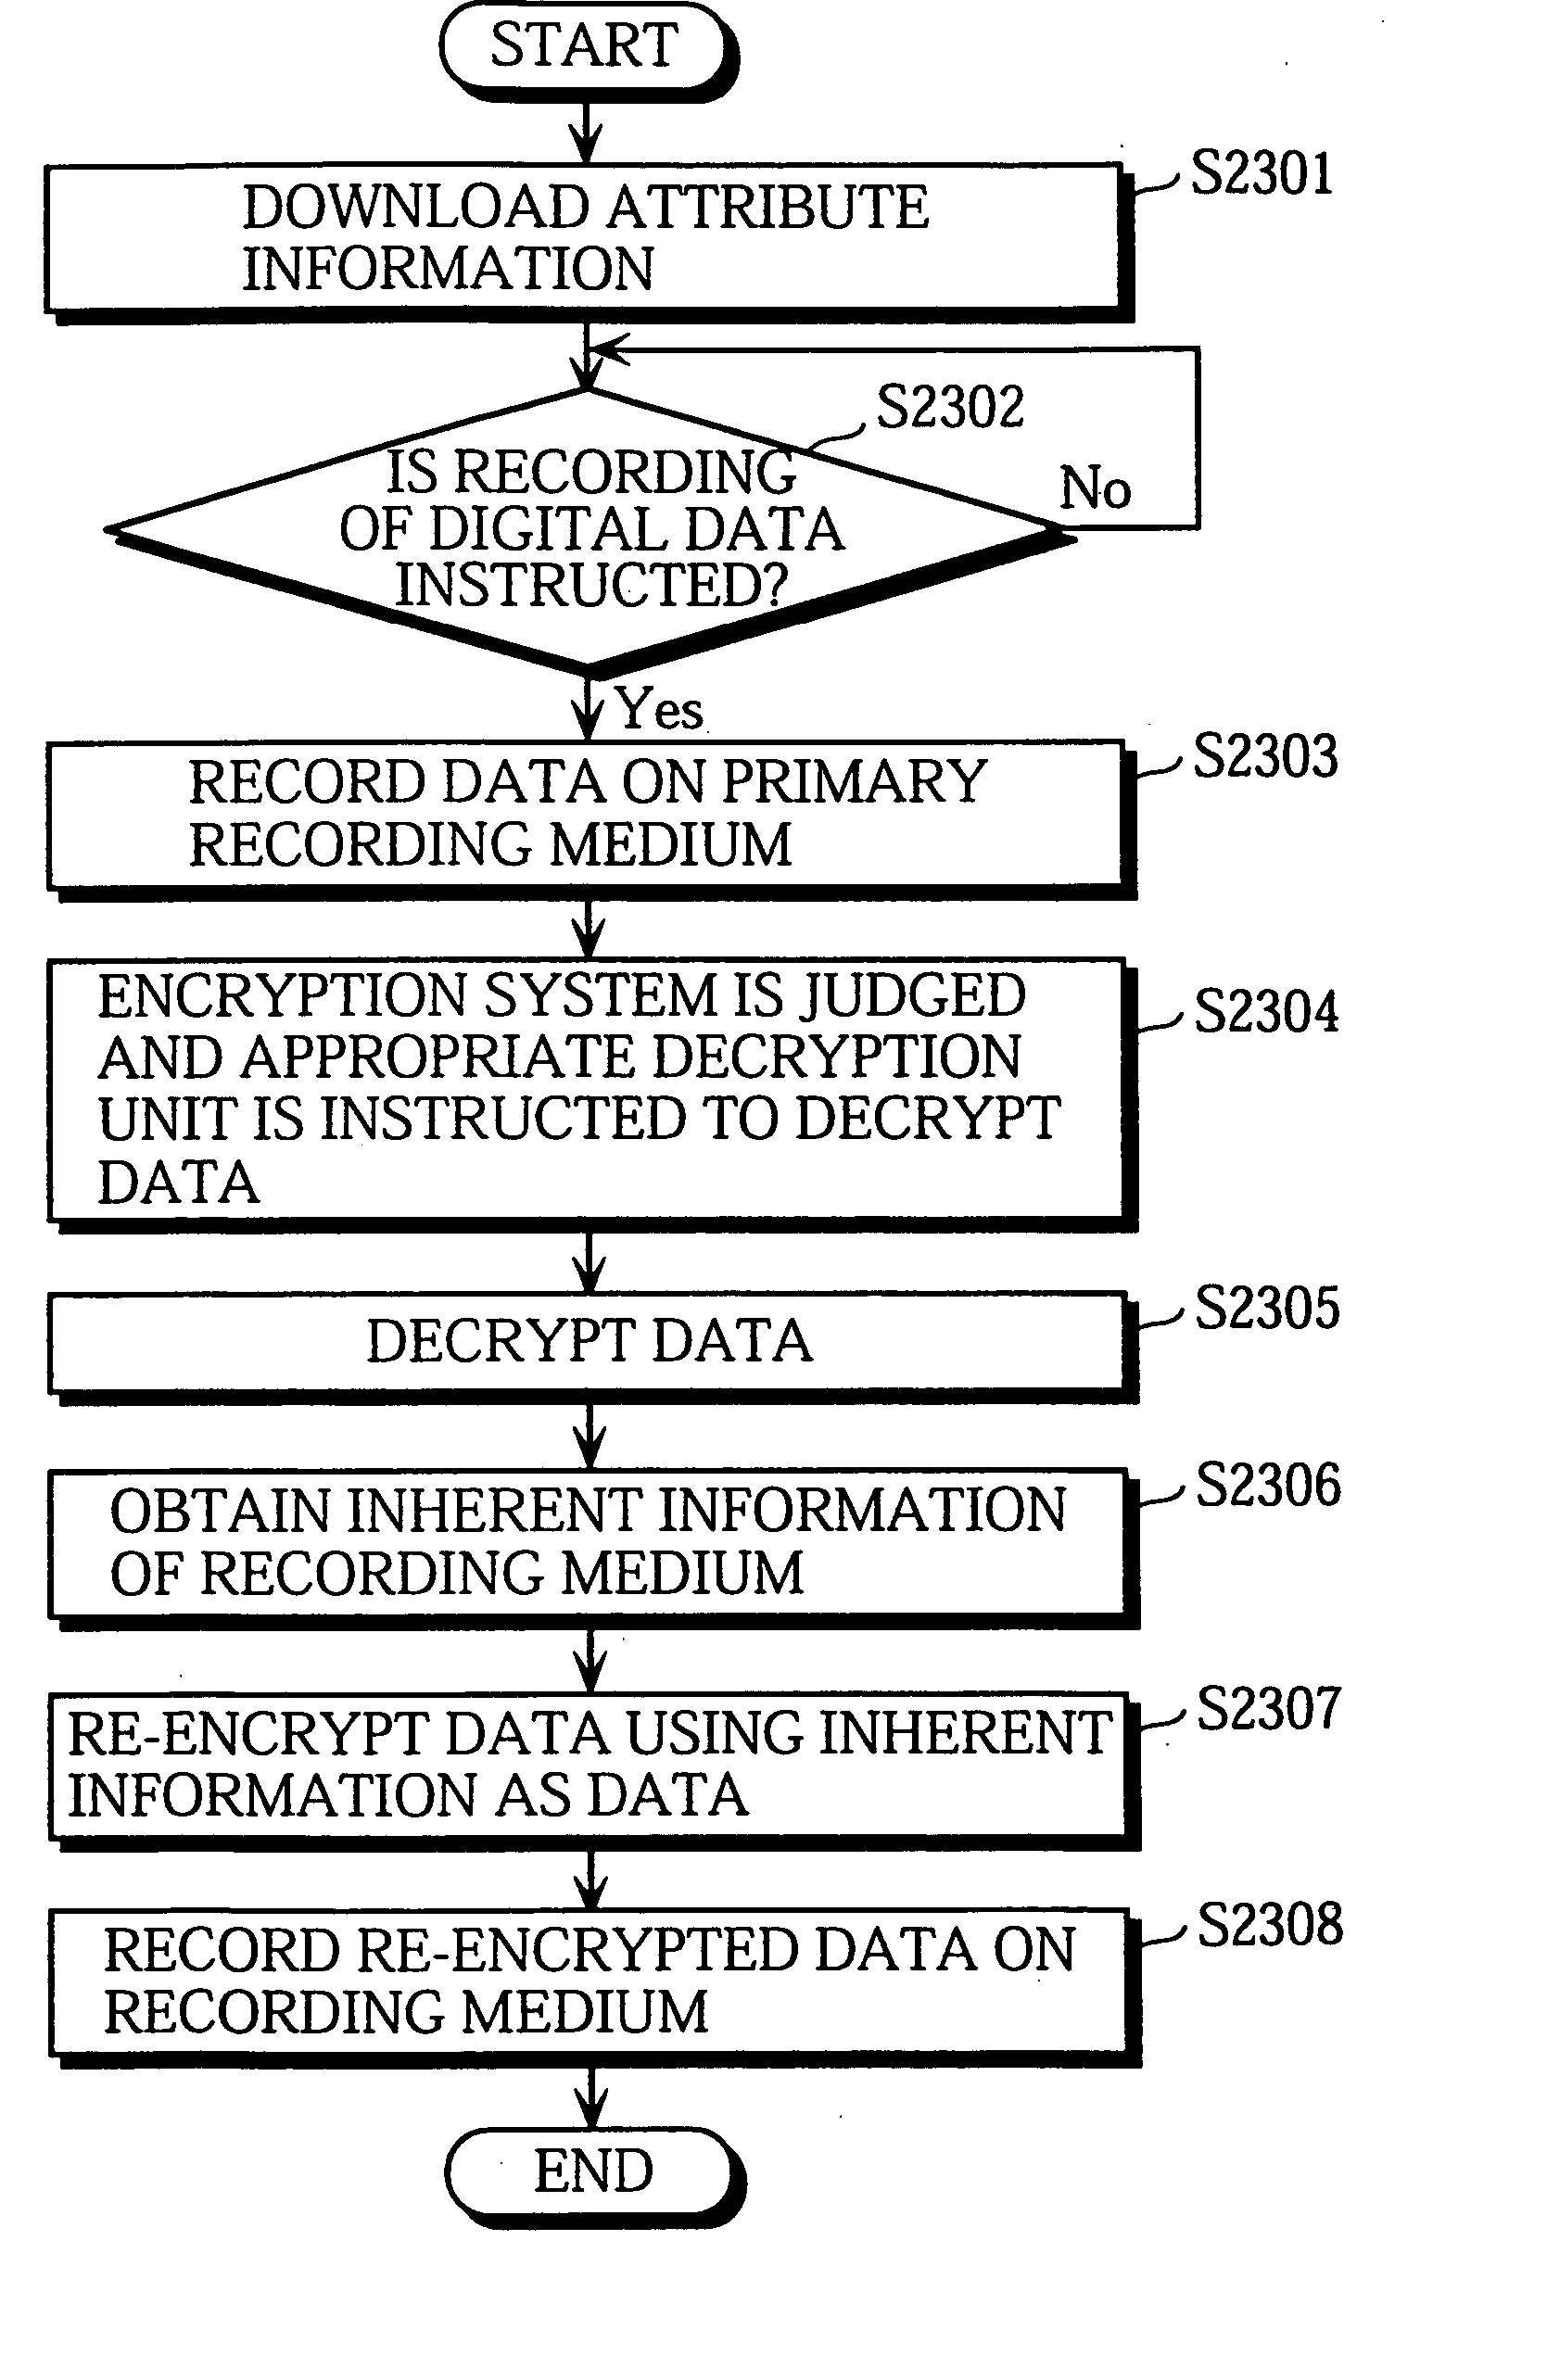 Digital data recording apparatus, digital data recording method, and computer-readable recording medium